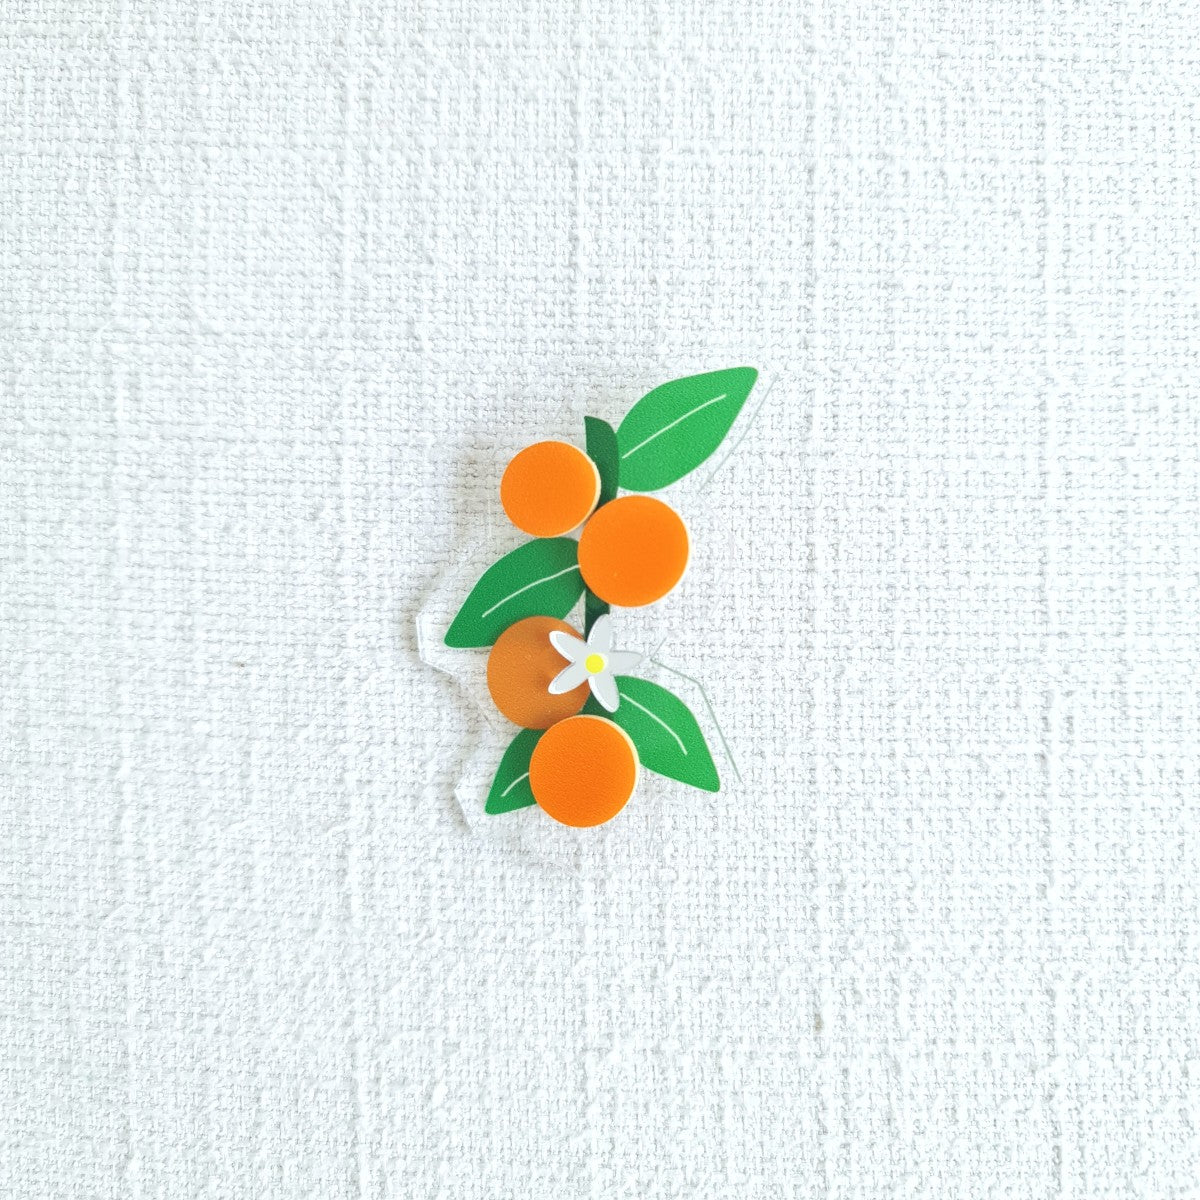 Mandarin Orange on the Vine Brooch